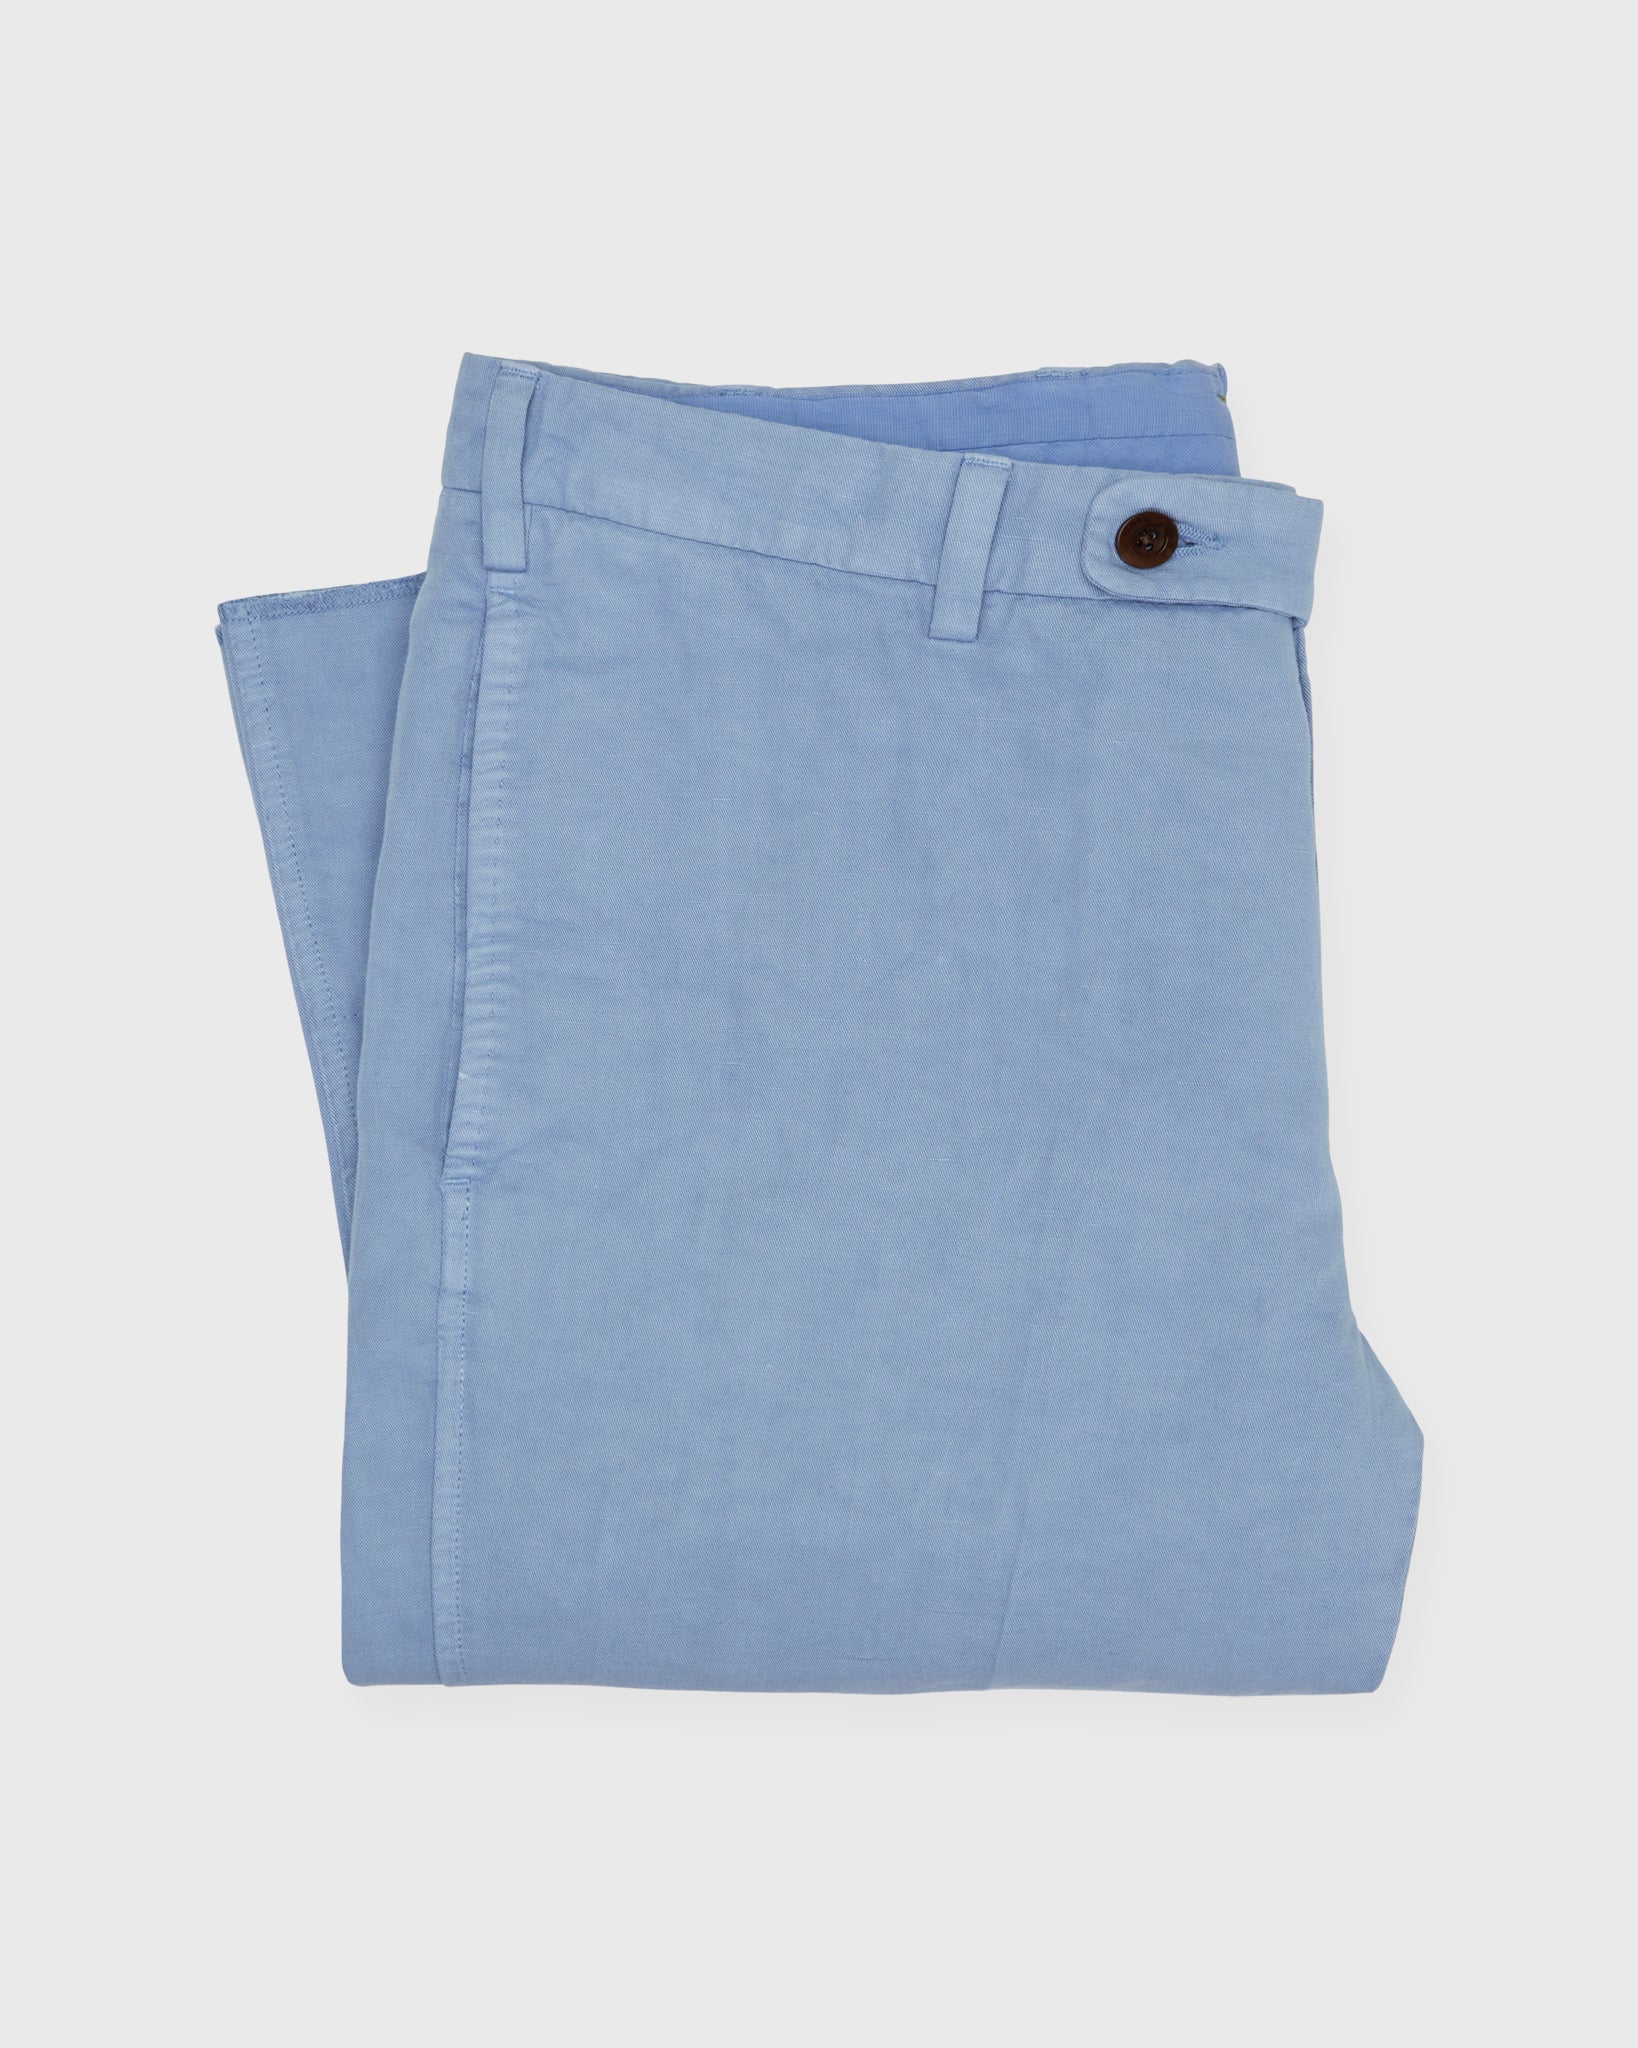 Garment-Dyed Sport Trouser in Cornflower Cotolino Twill